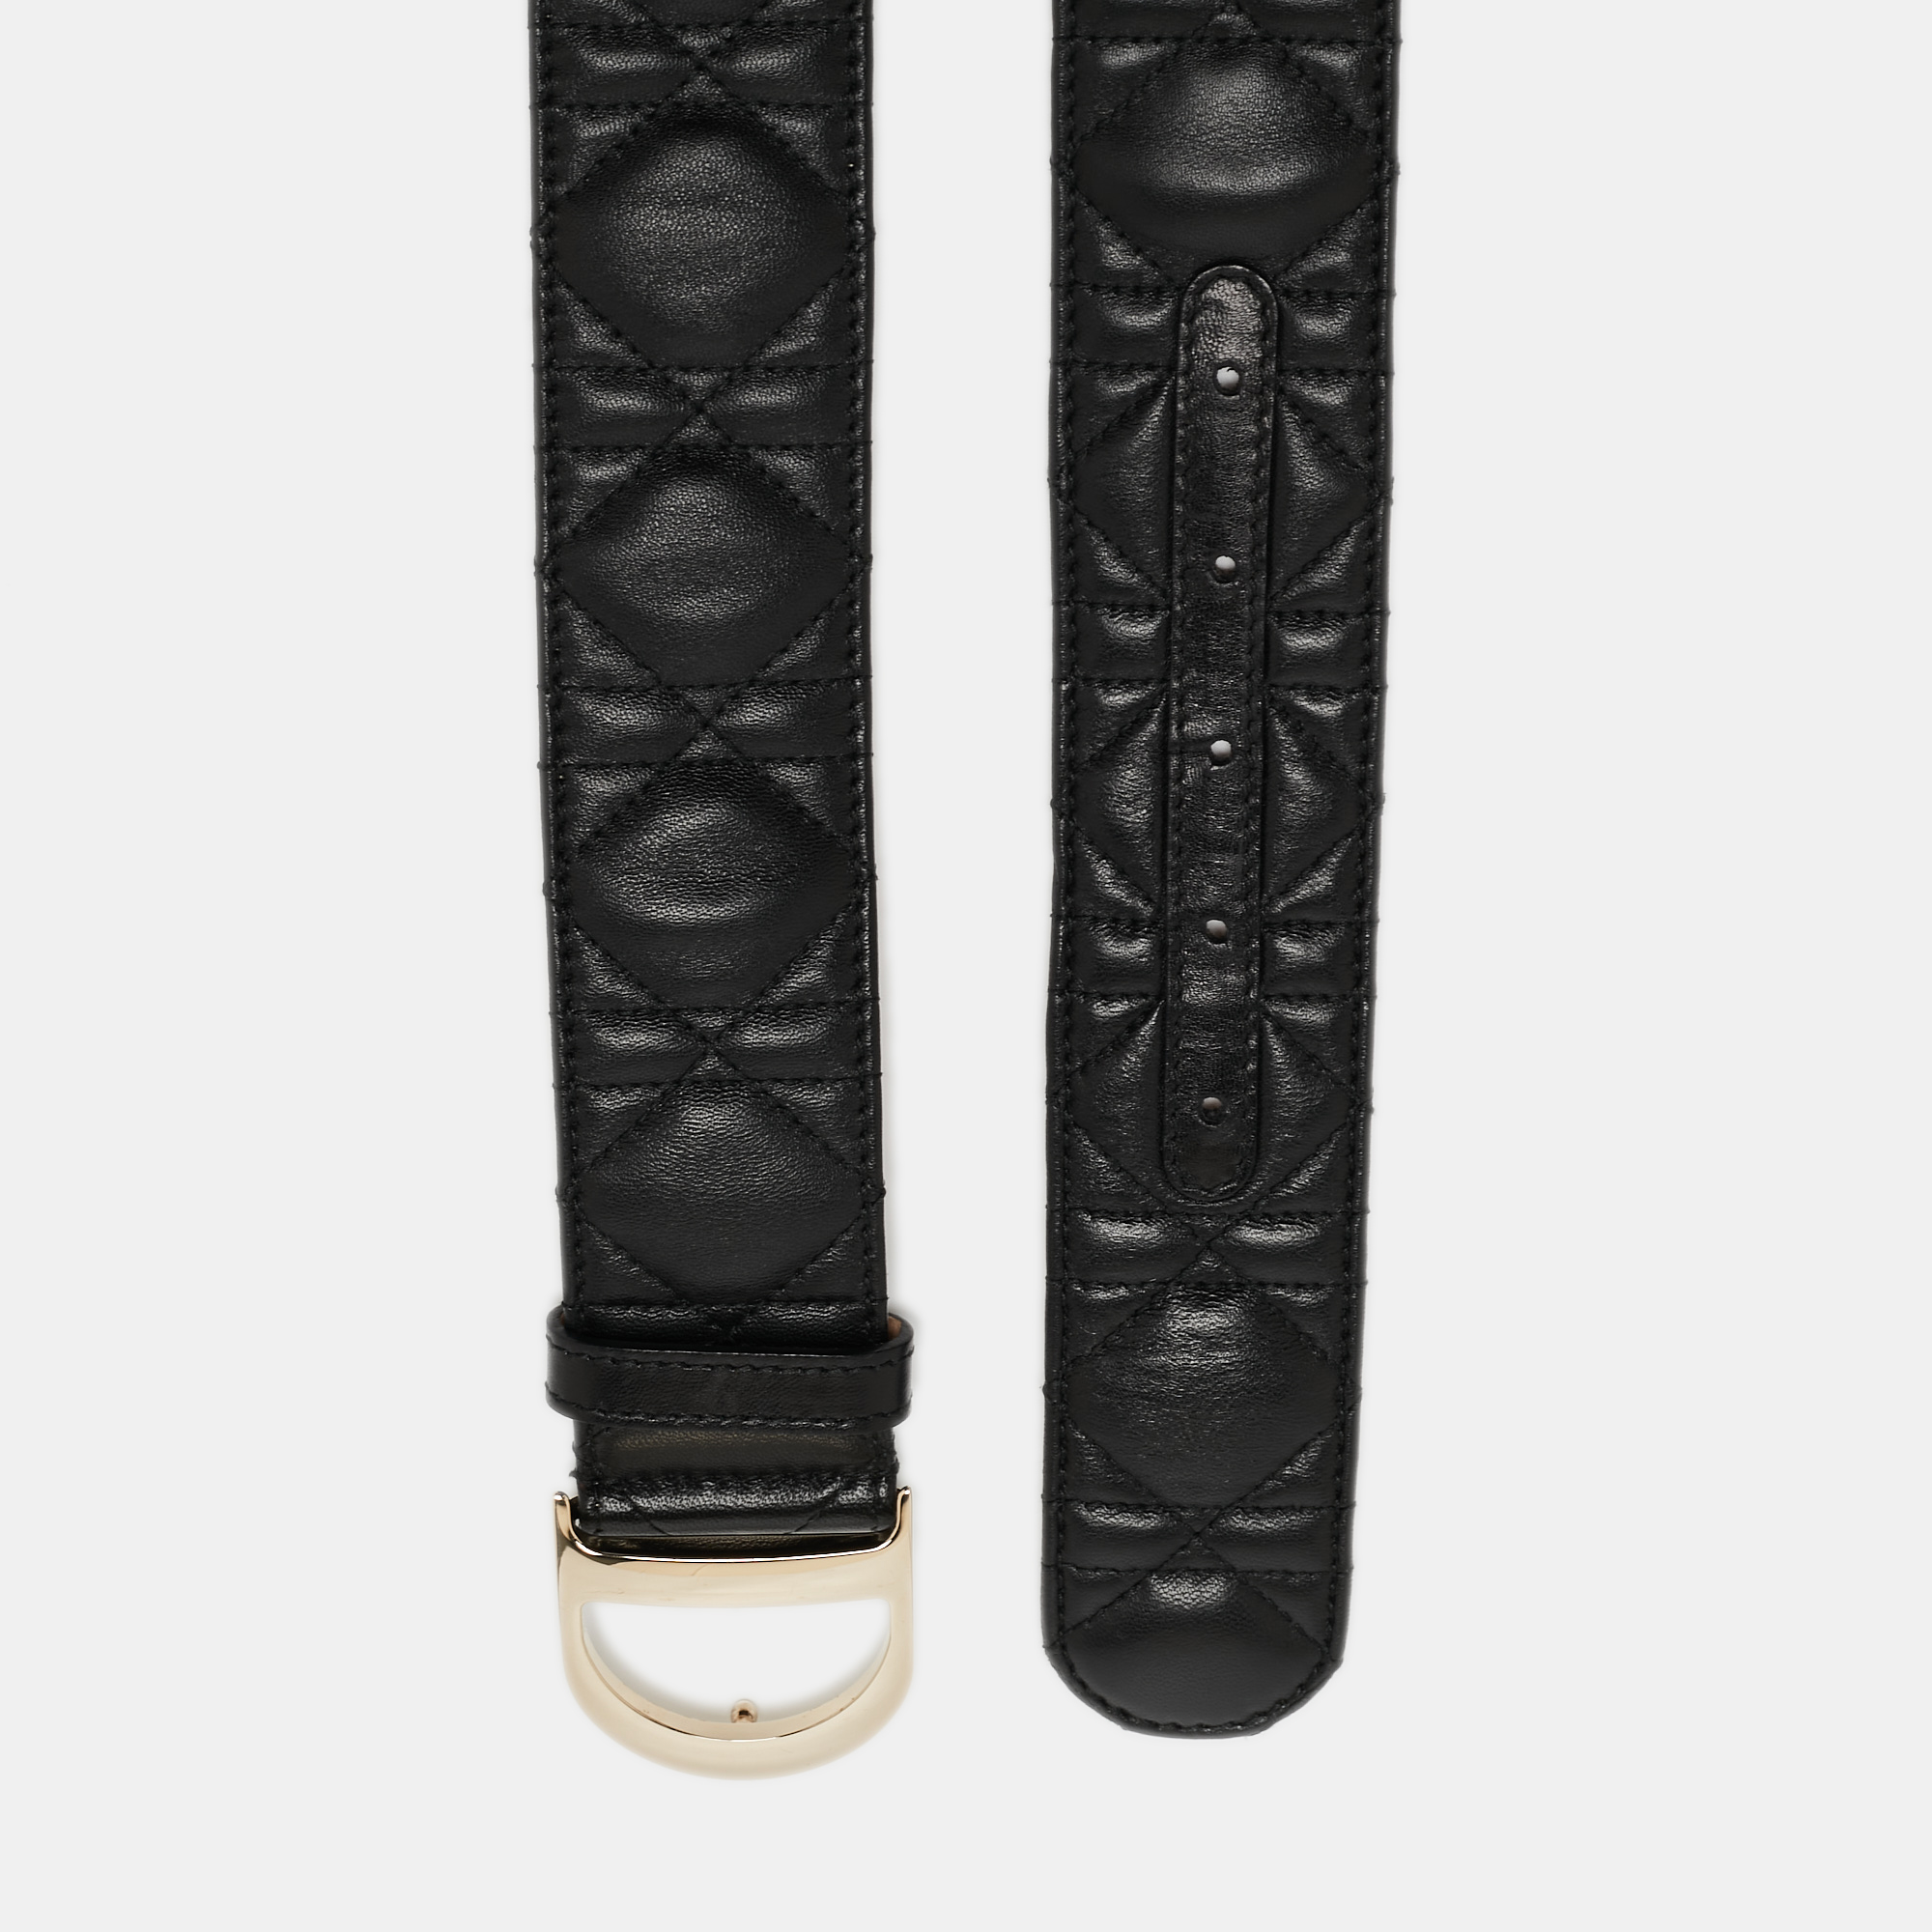 Dior Black Cannage Leather D Buckle Belt 90 CM